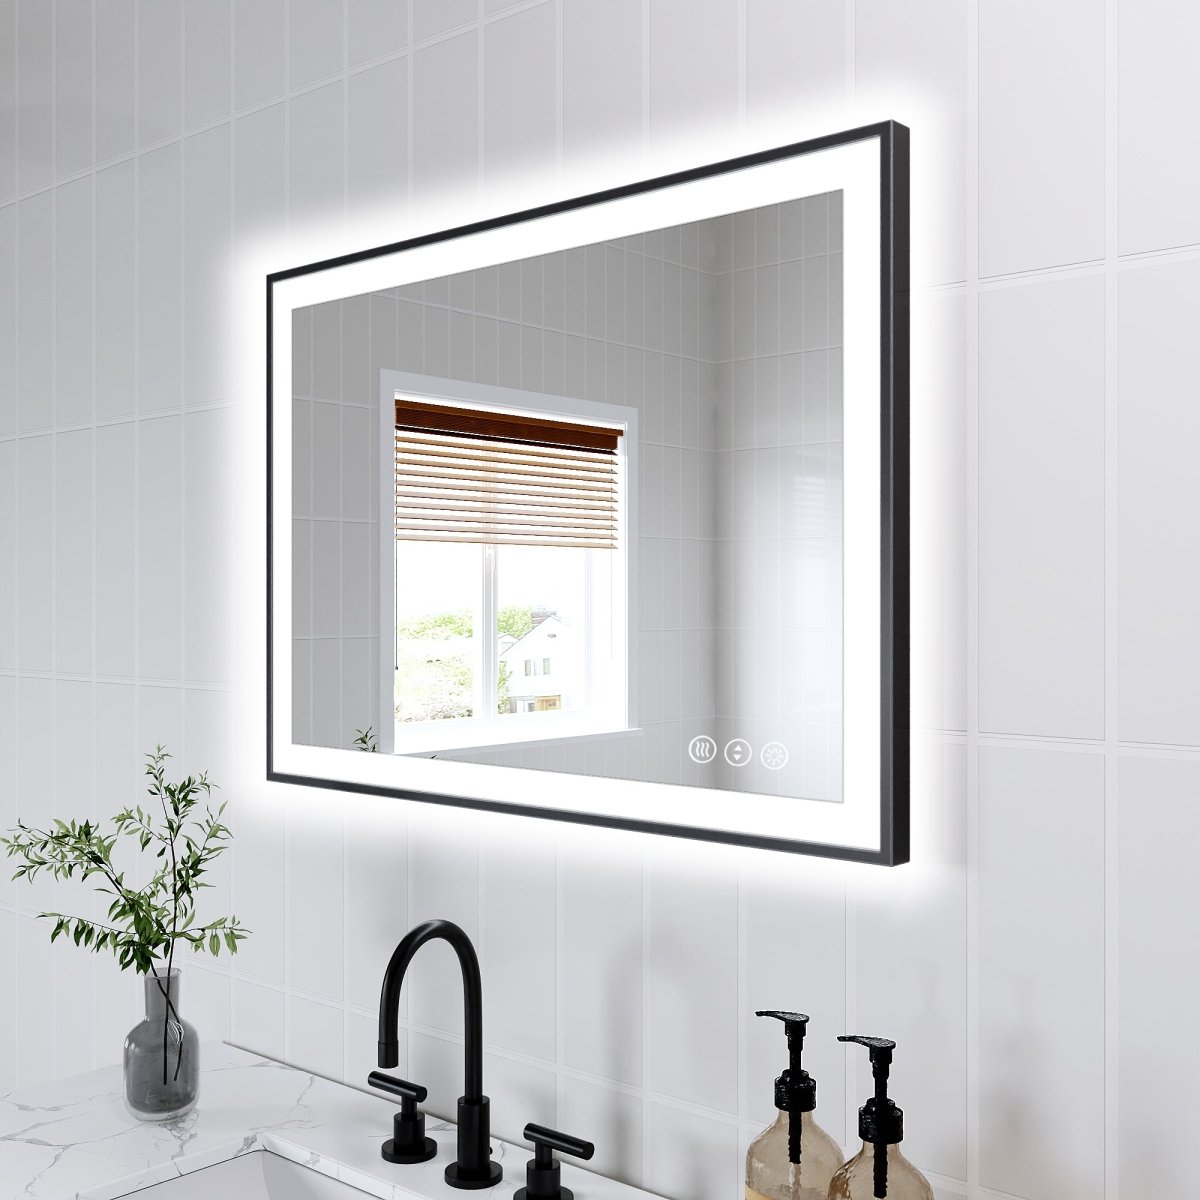 Apex-Noir 20"x28" Framed LED Lighted Bathroom Mirror